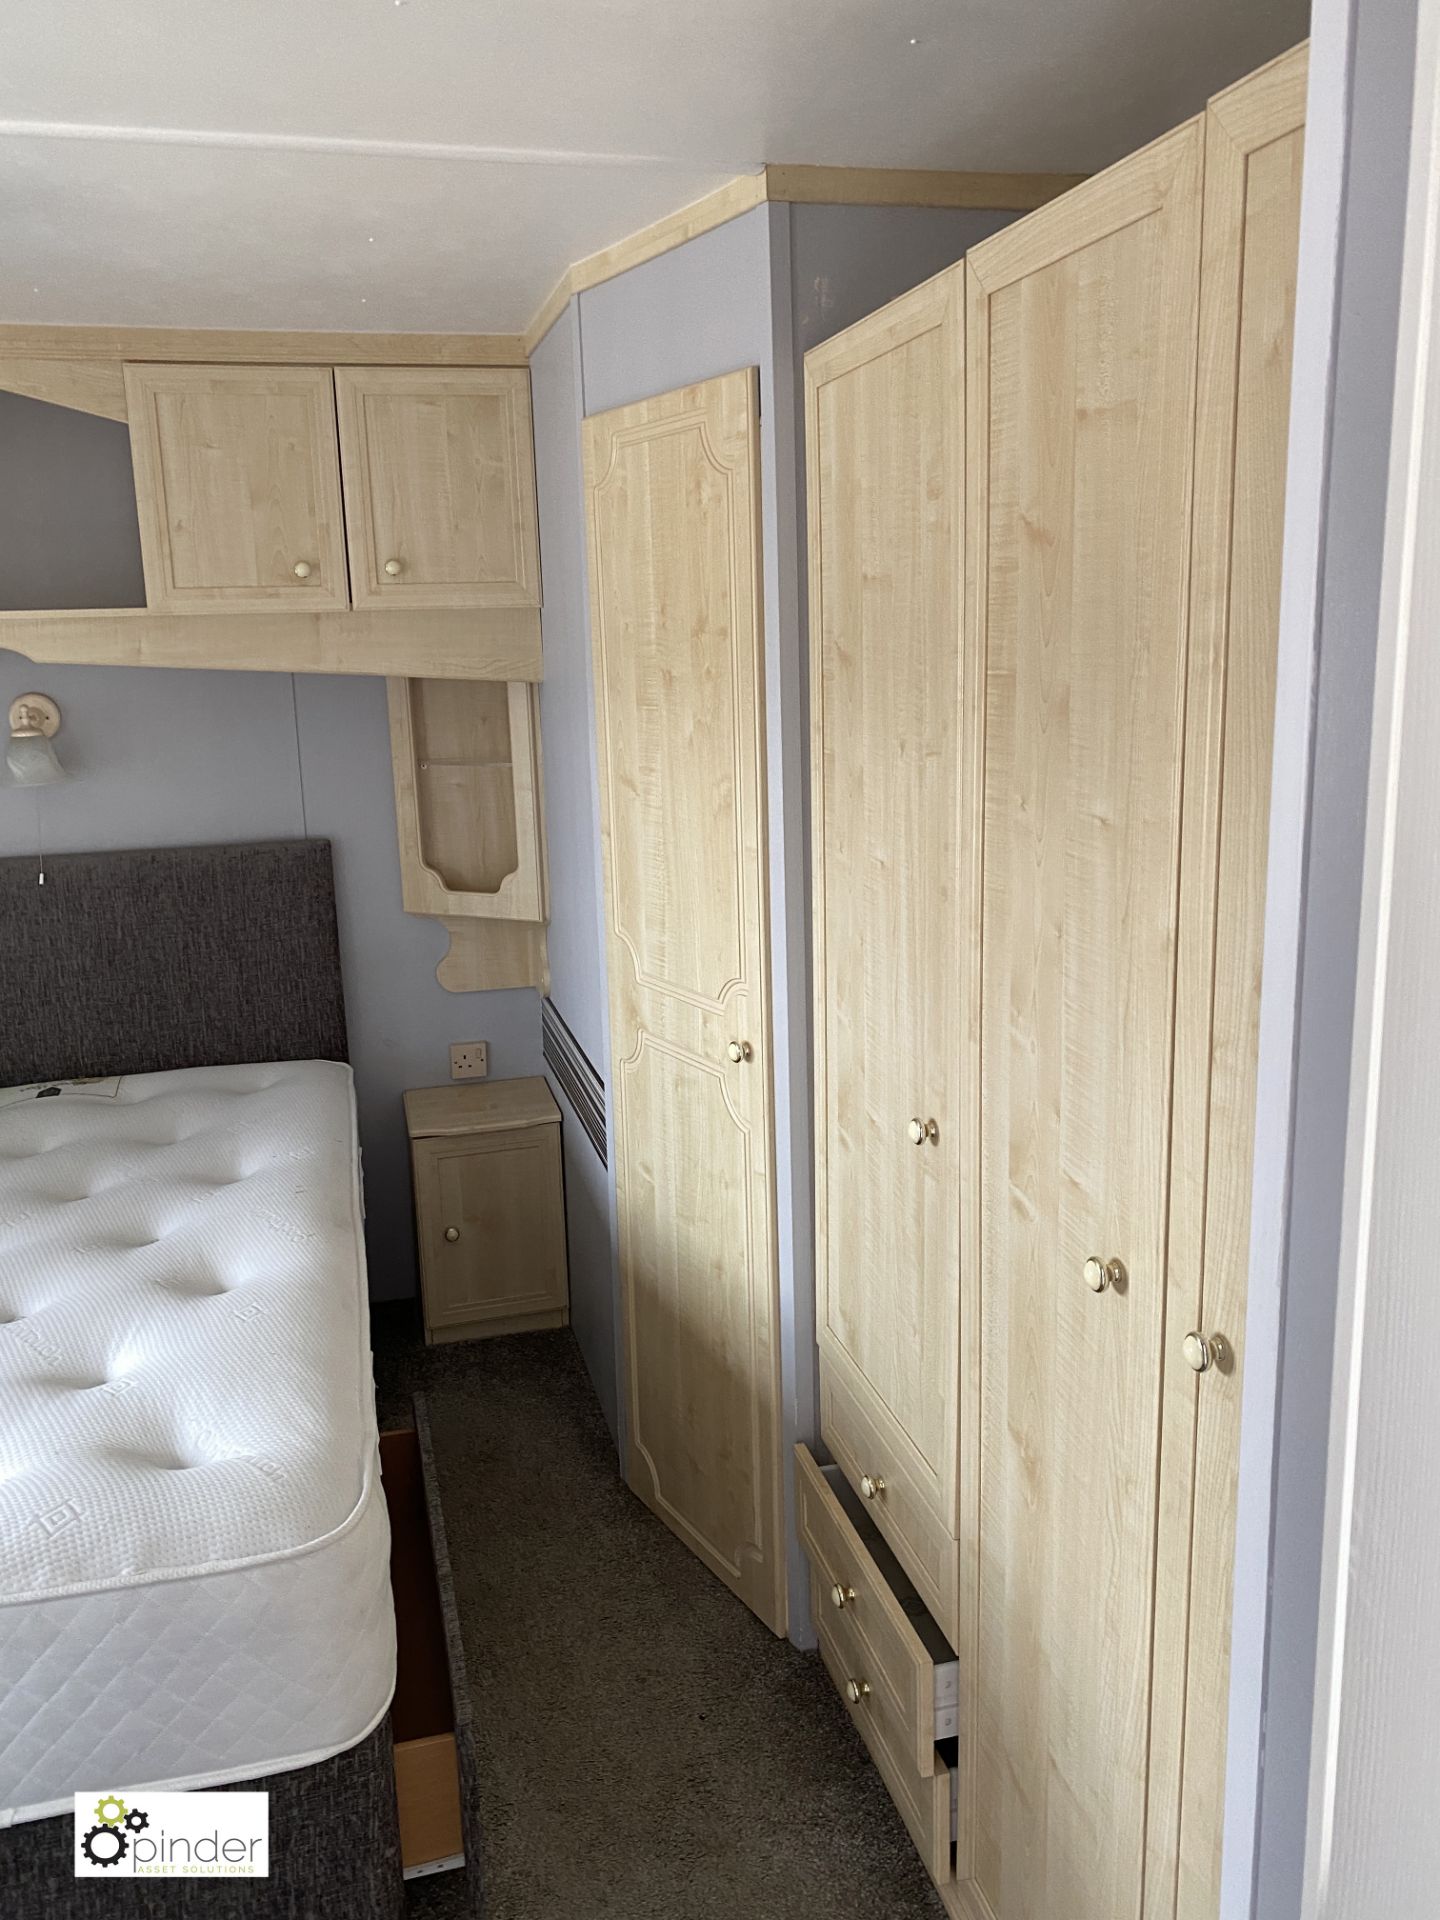 Rancho Grande Static Caravan, 35ft x 12ft x 2B, 2 bedrooms, bathroom, entrance hall, cupboard, - Image 4 of 19